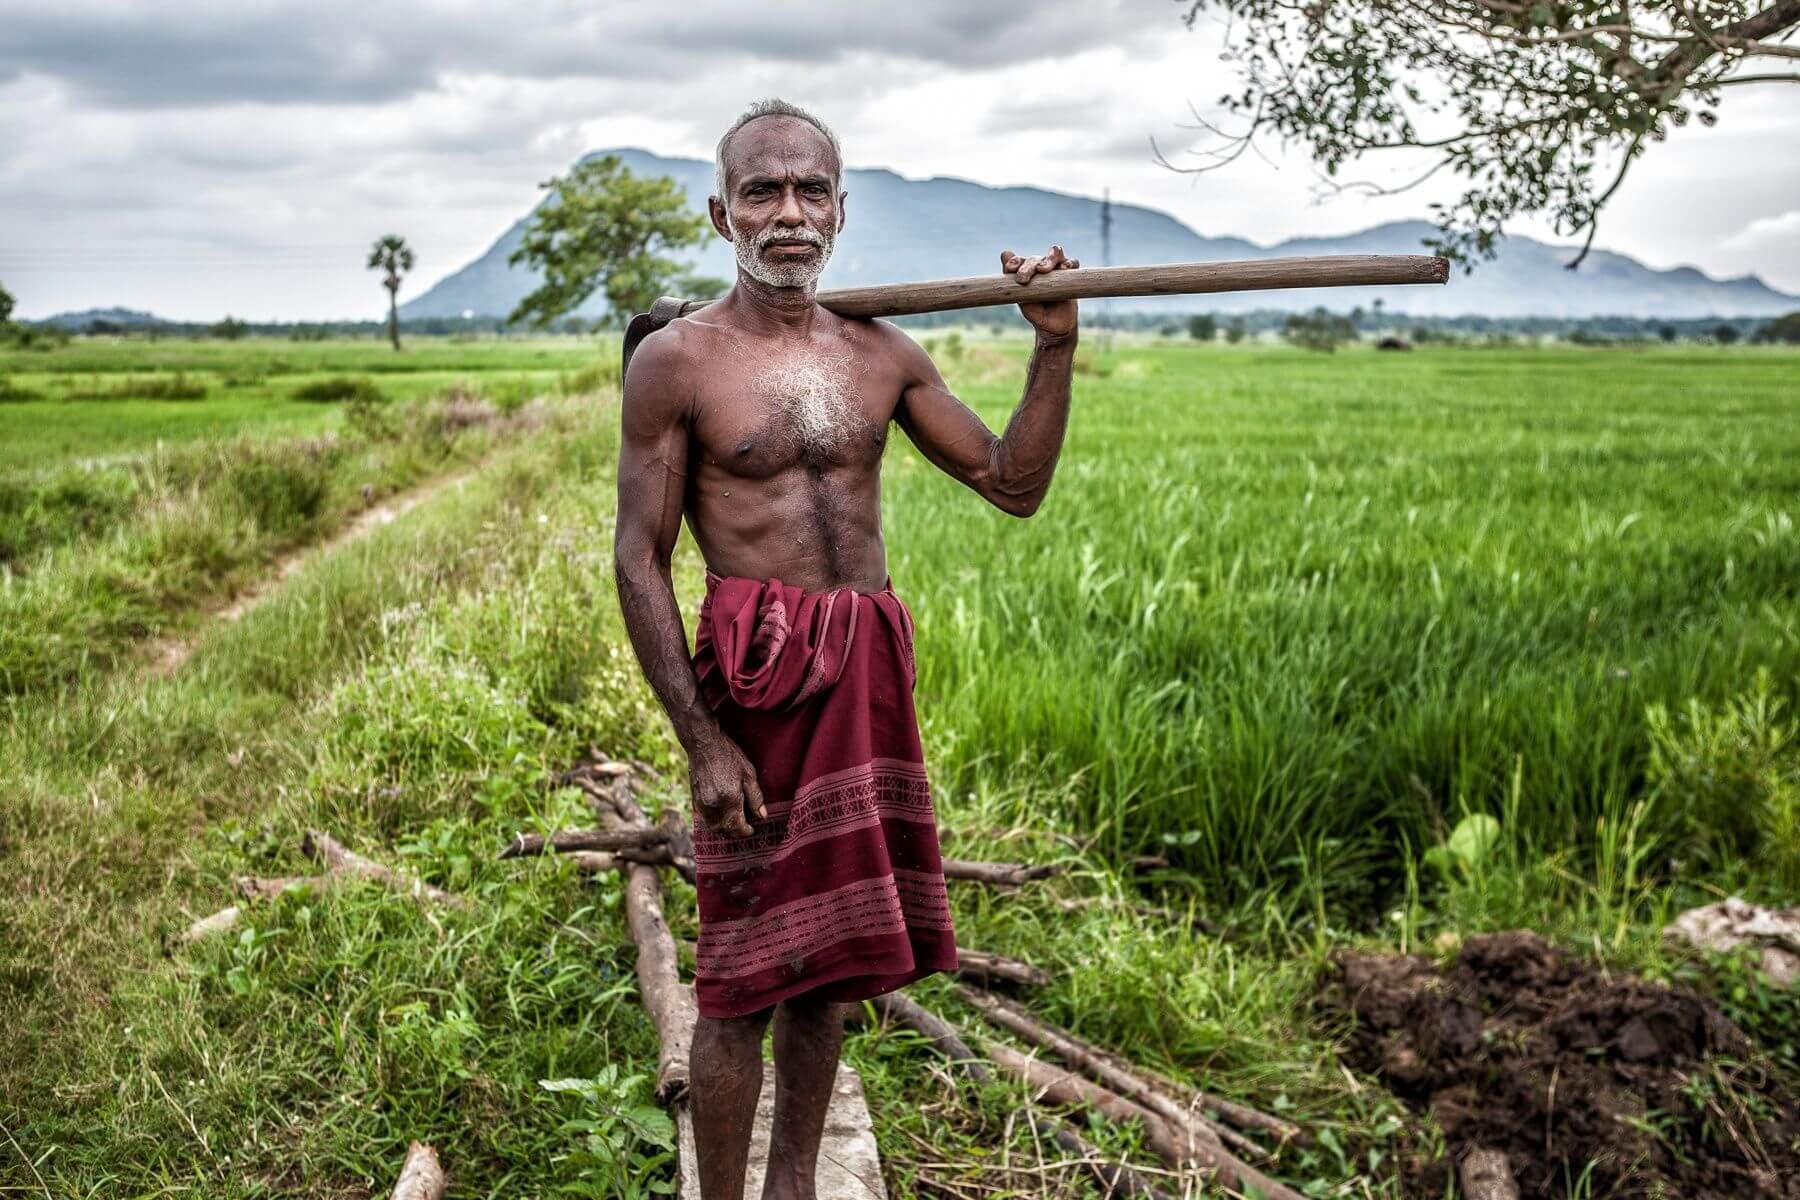 The farmer goes to paddy field to work hard in Yala countryside Sri Lanka